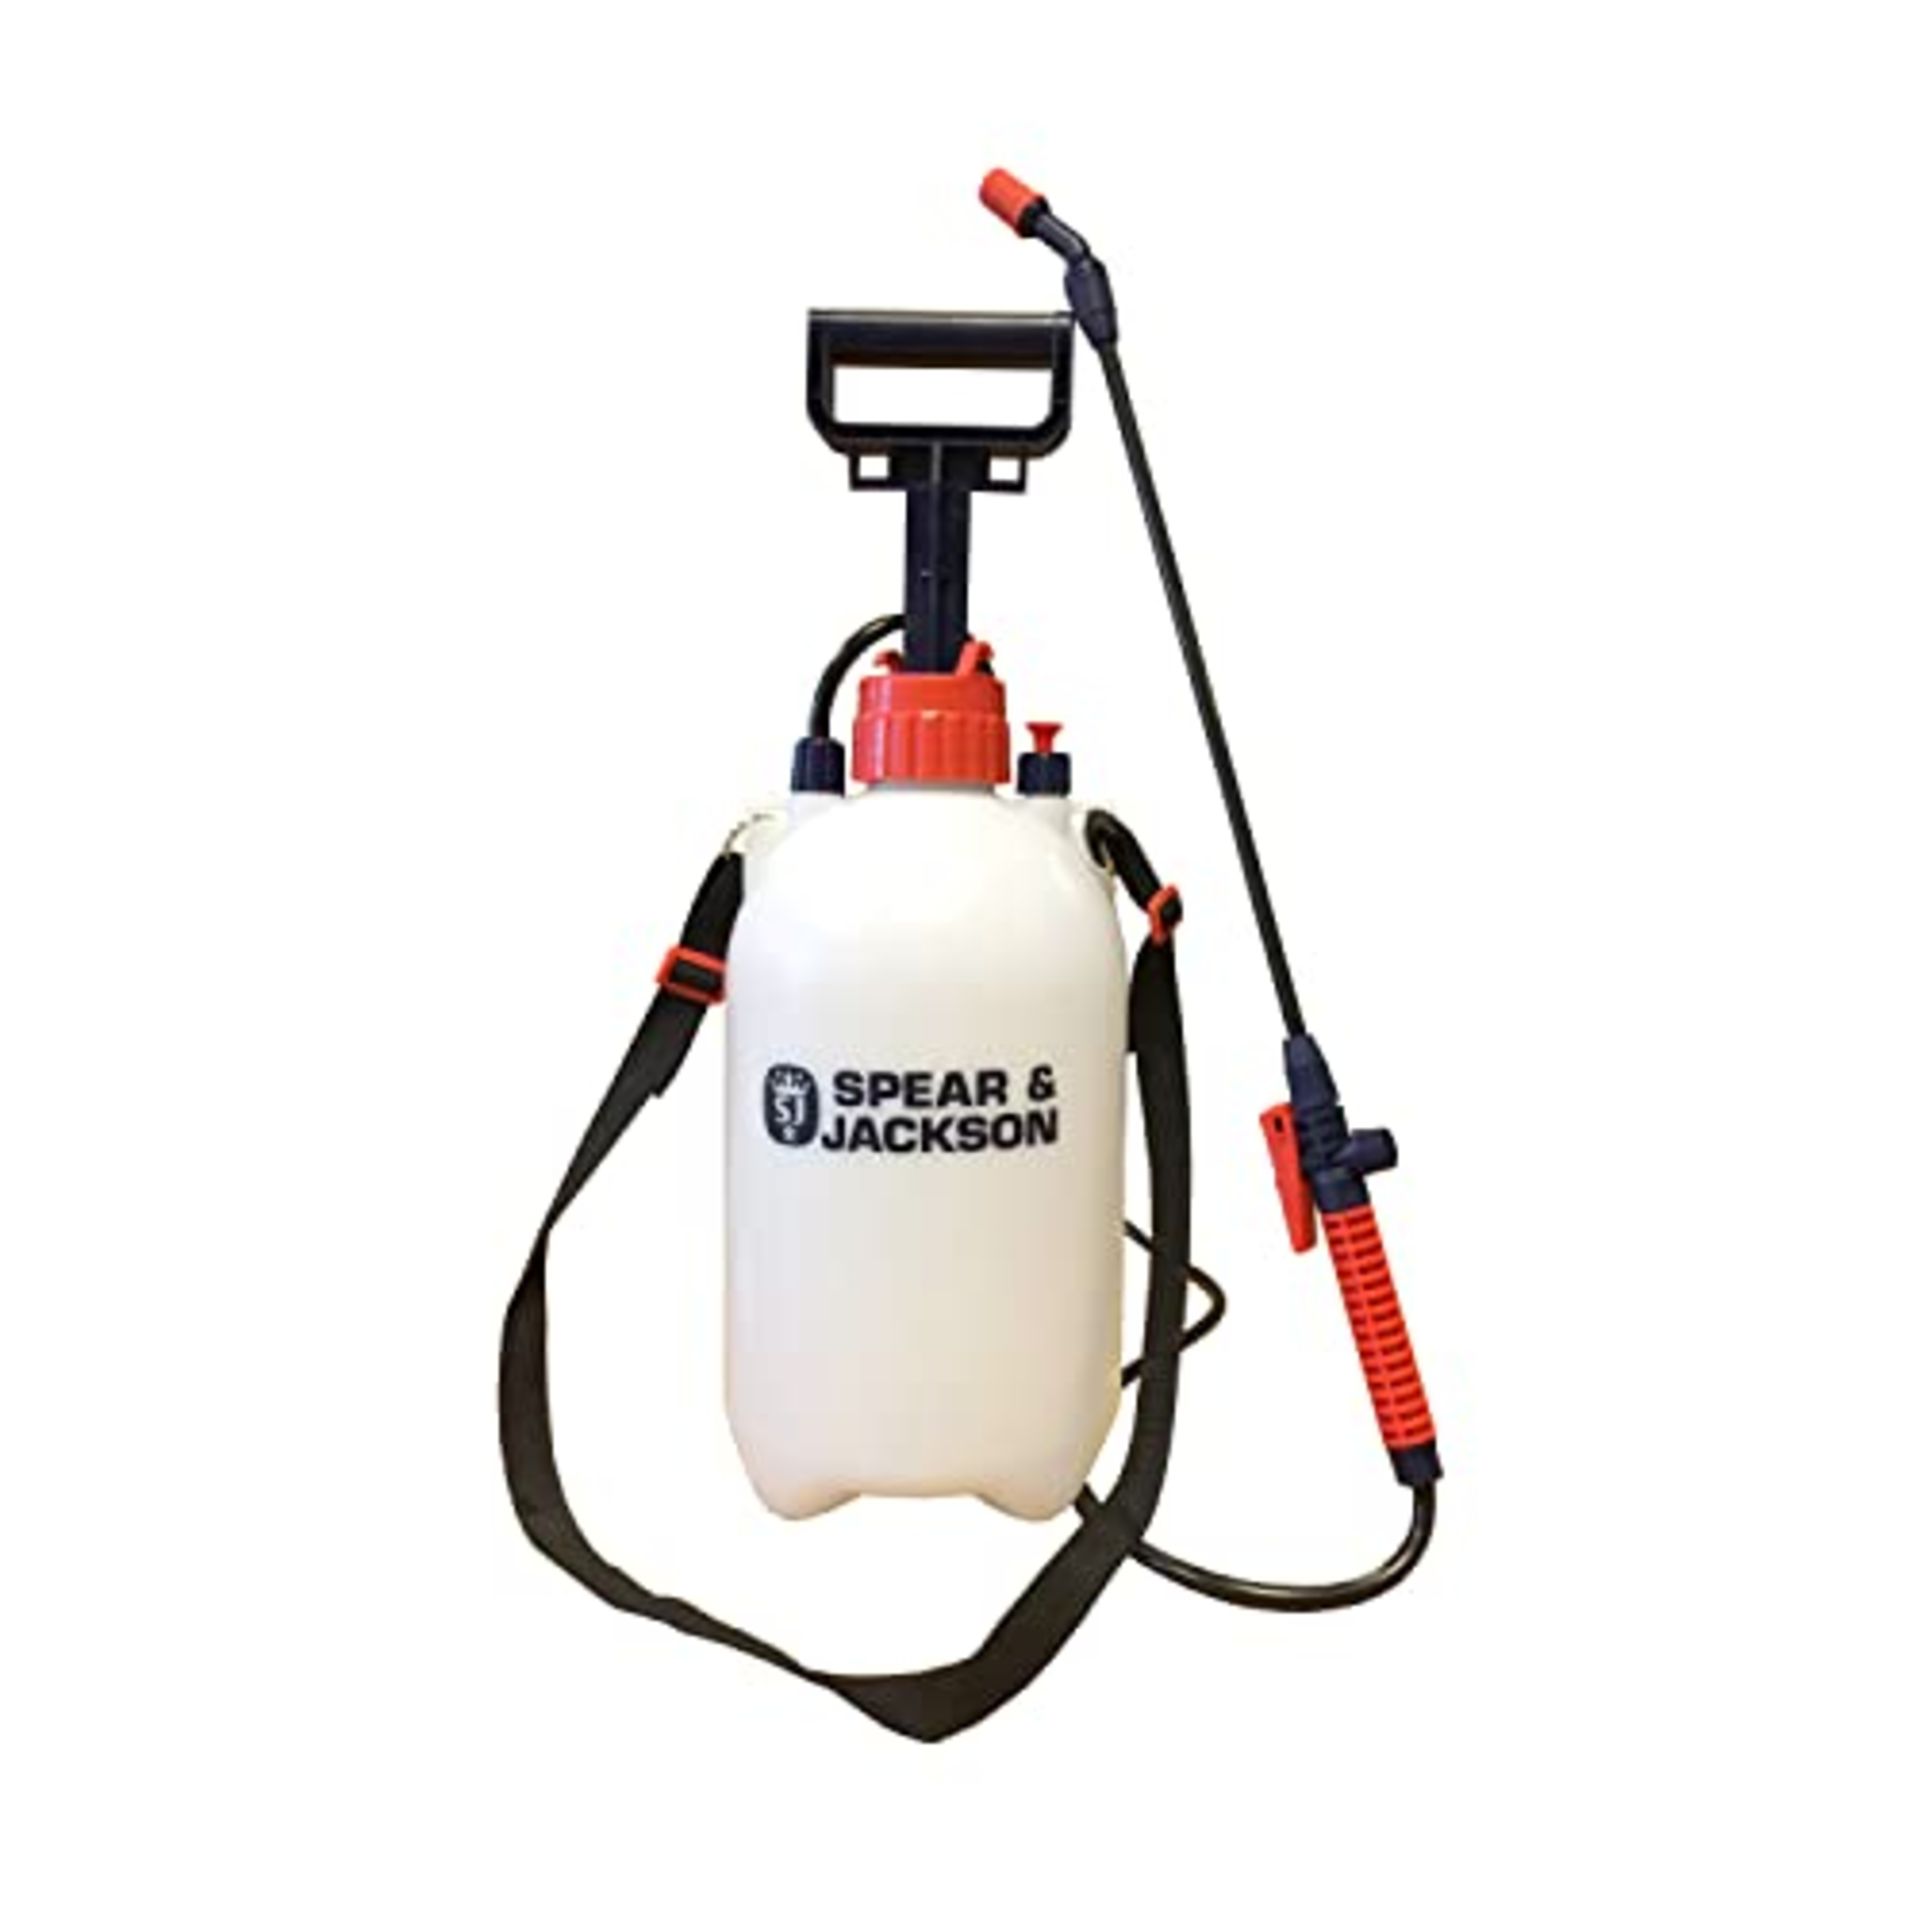 Spear & Jackson 5LPAPS Pressure Sprayer, with pump action, 5 liters